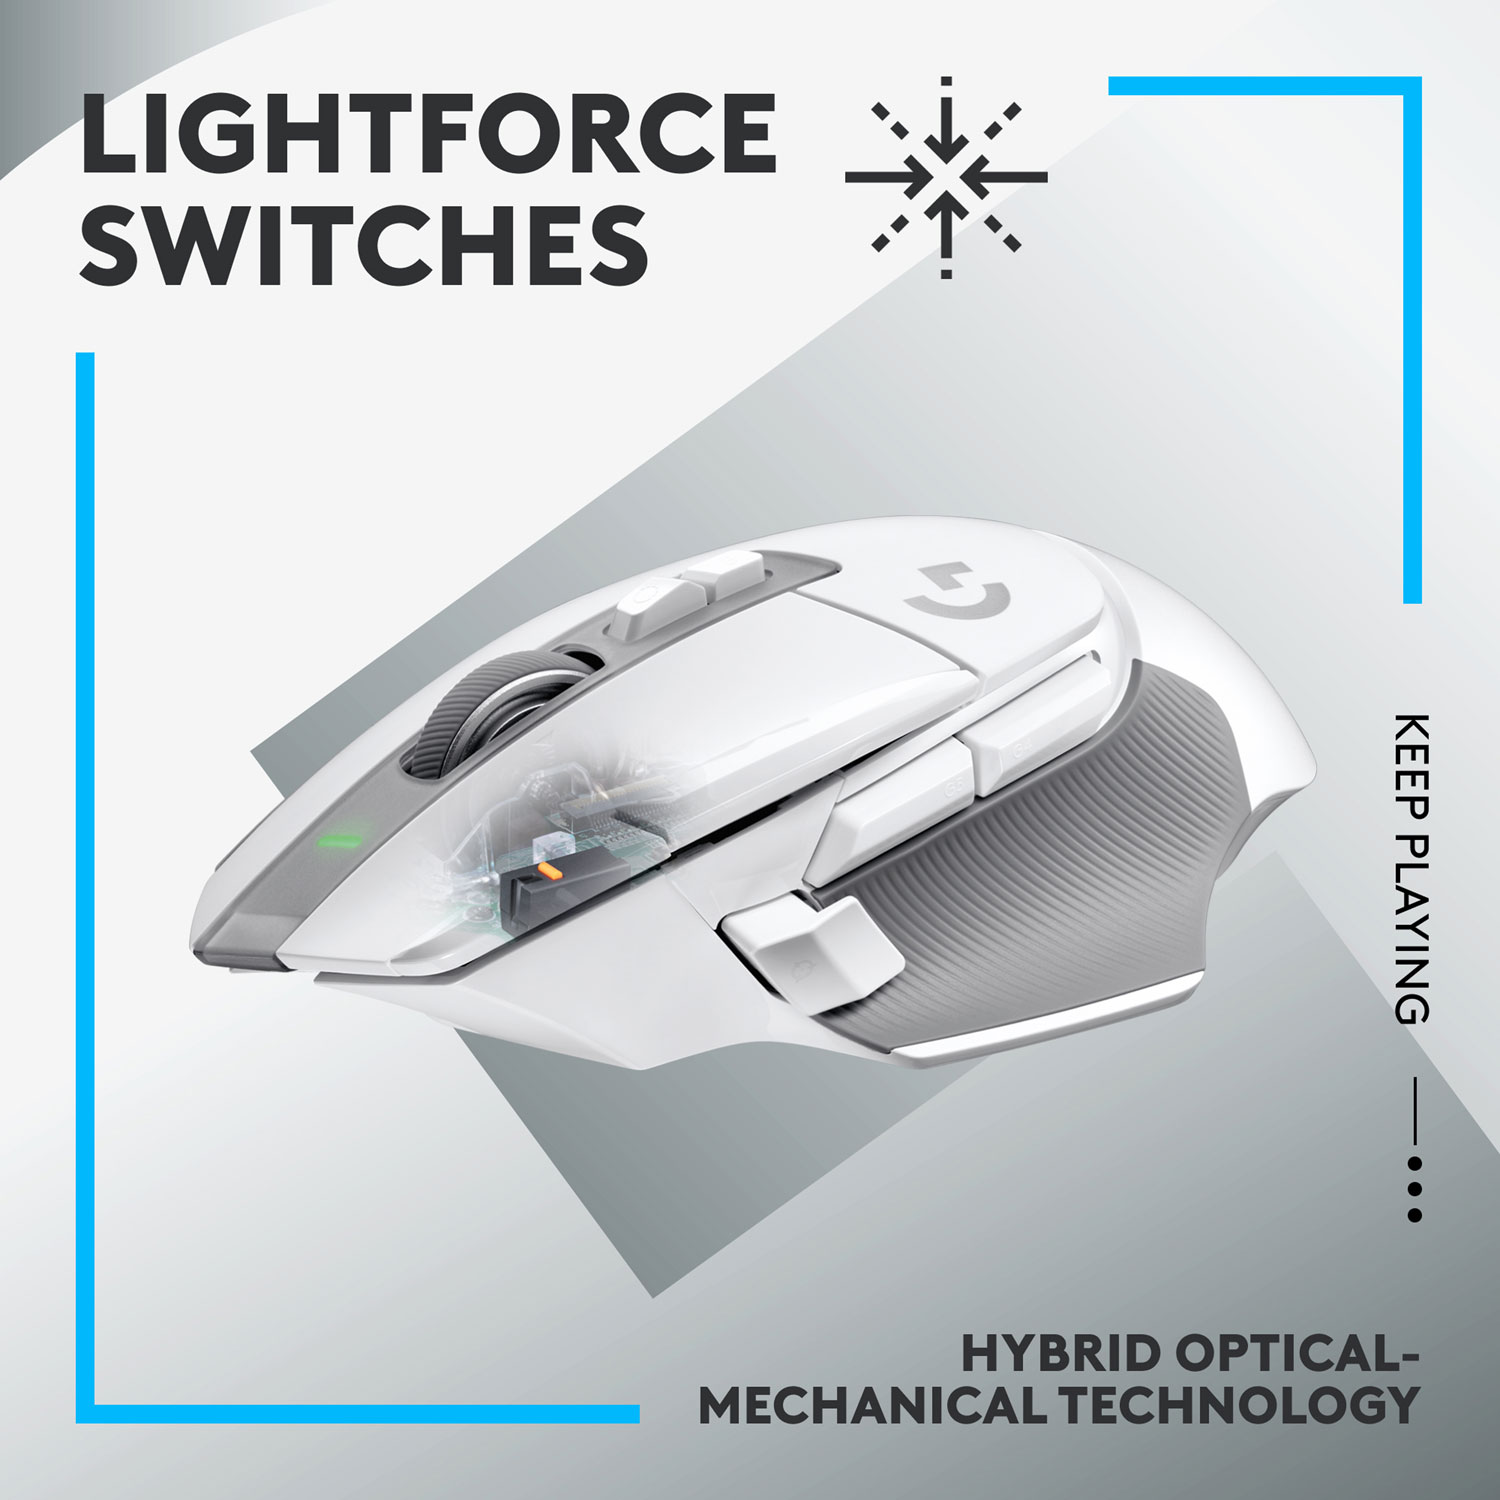 Logitech G502 Lightspeed Wireless Optical Gaming Mouse with RGB Lighting  Black 910-005565 - Best Buy